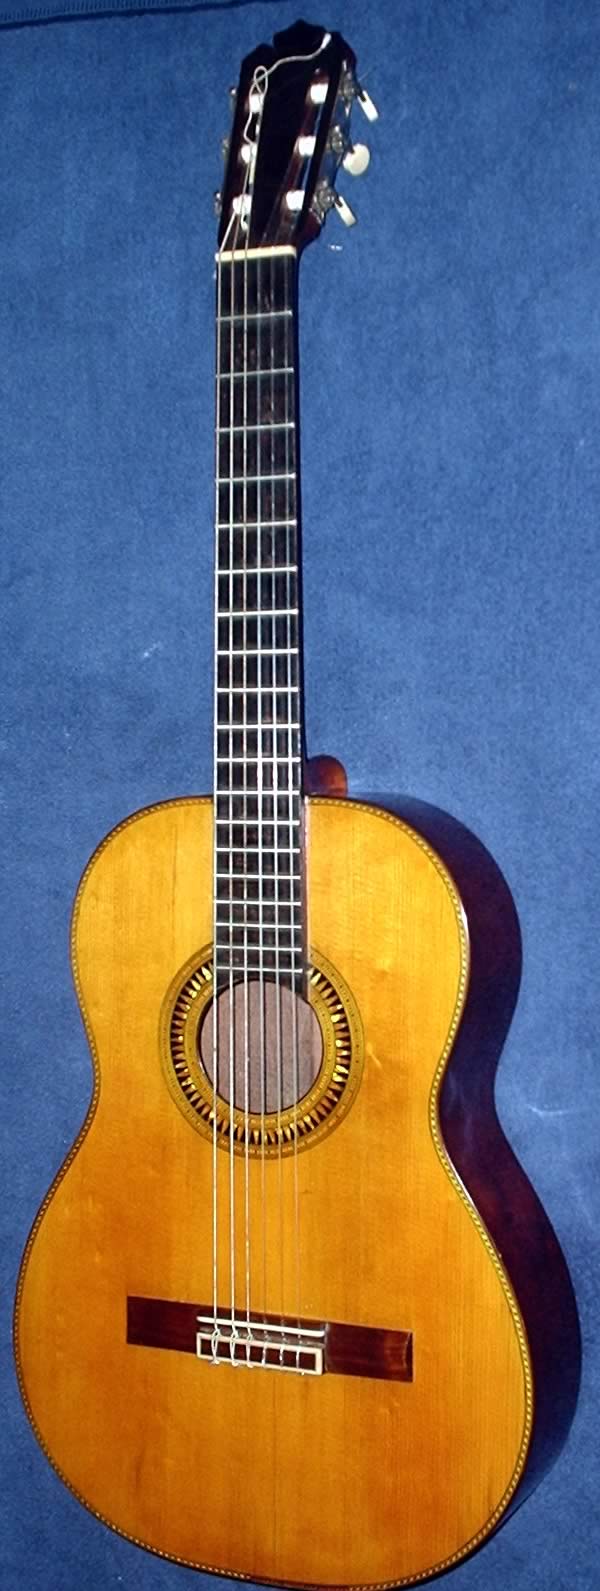 Guitarra Anónima - Anonymous Guitar - 1930 decade 